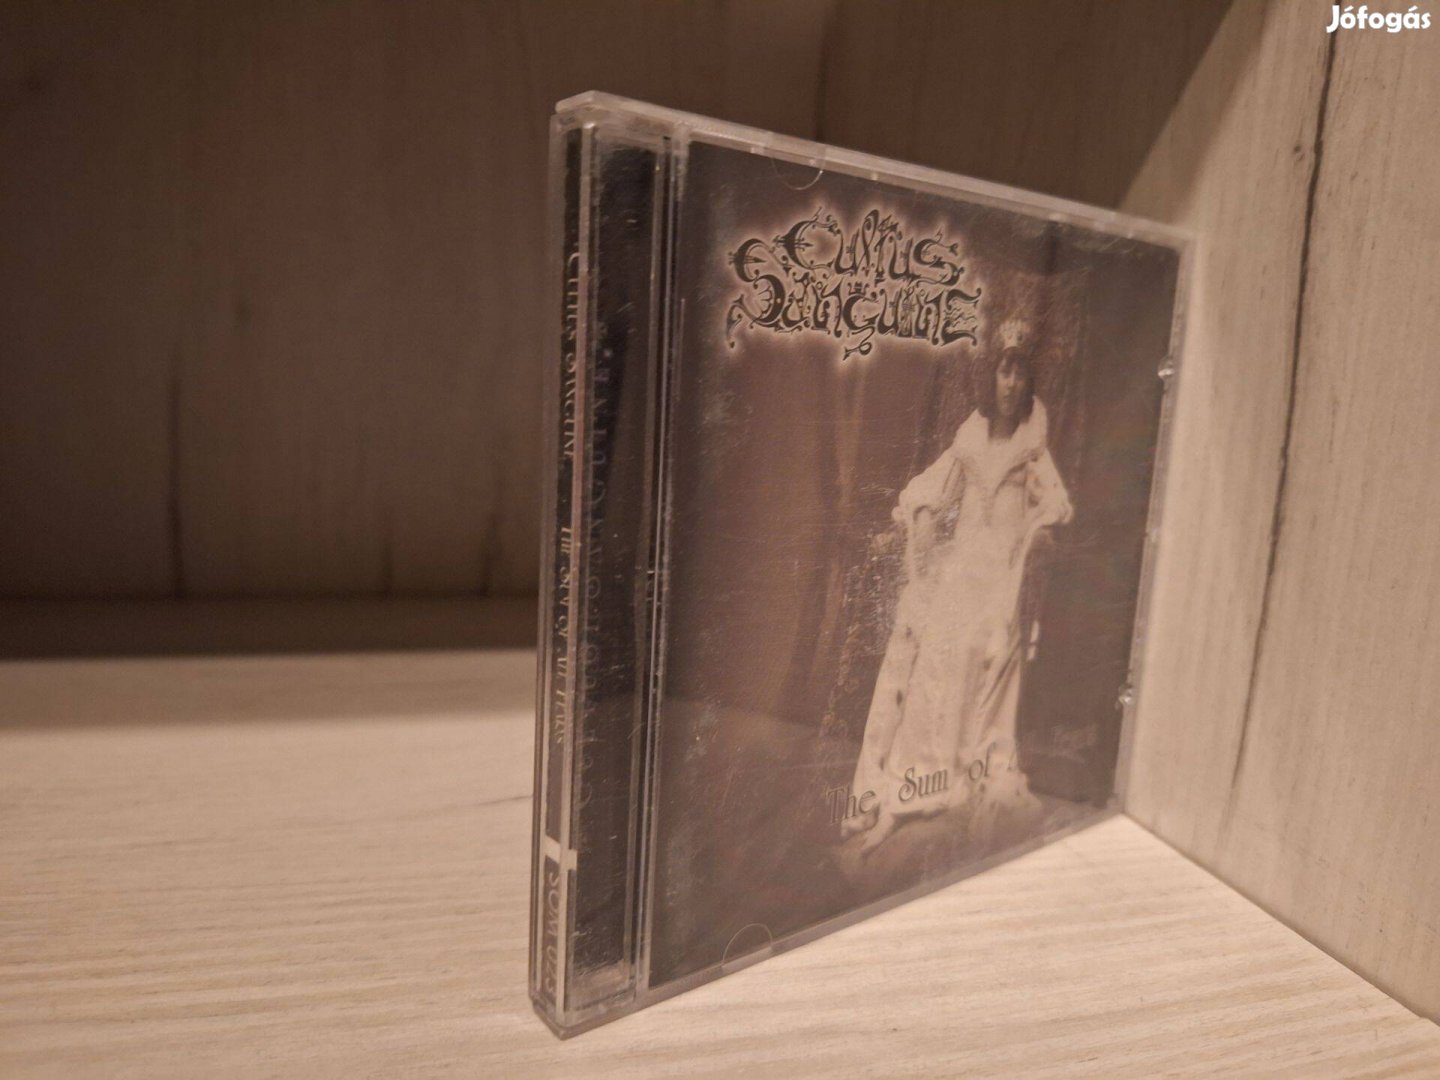 Cultus Sanguine - The Sum Of All Fears CD